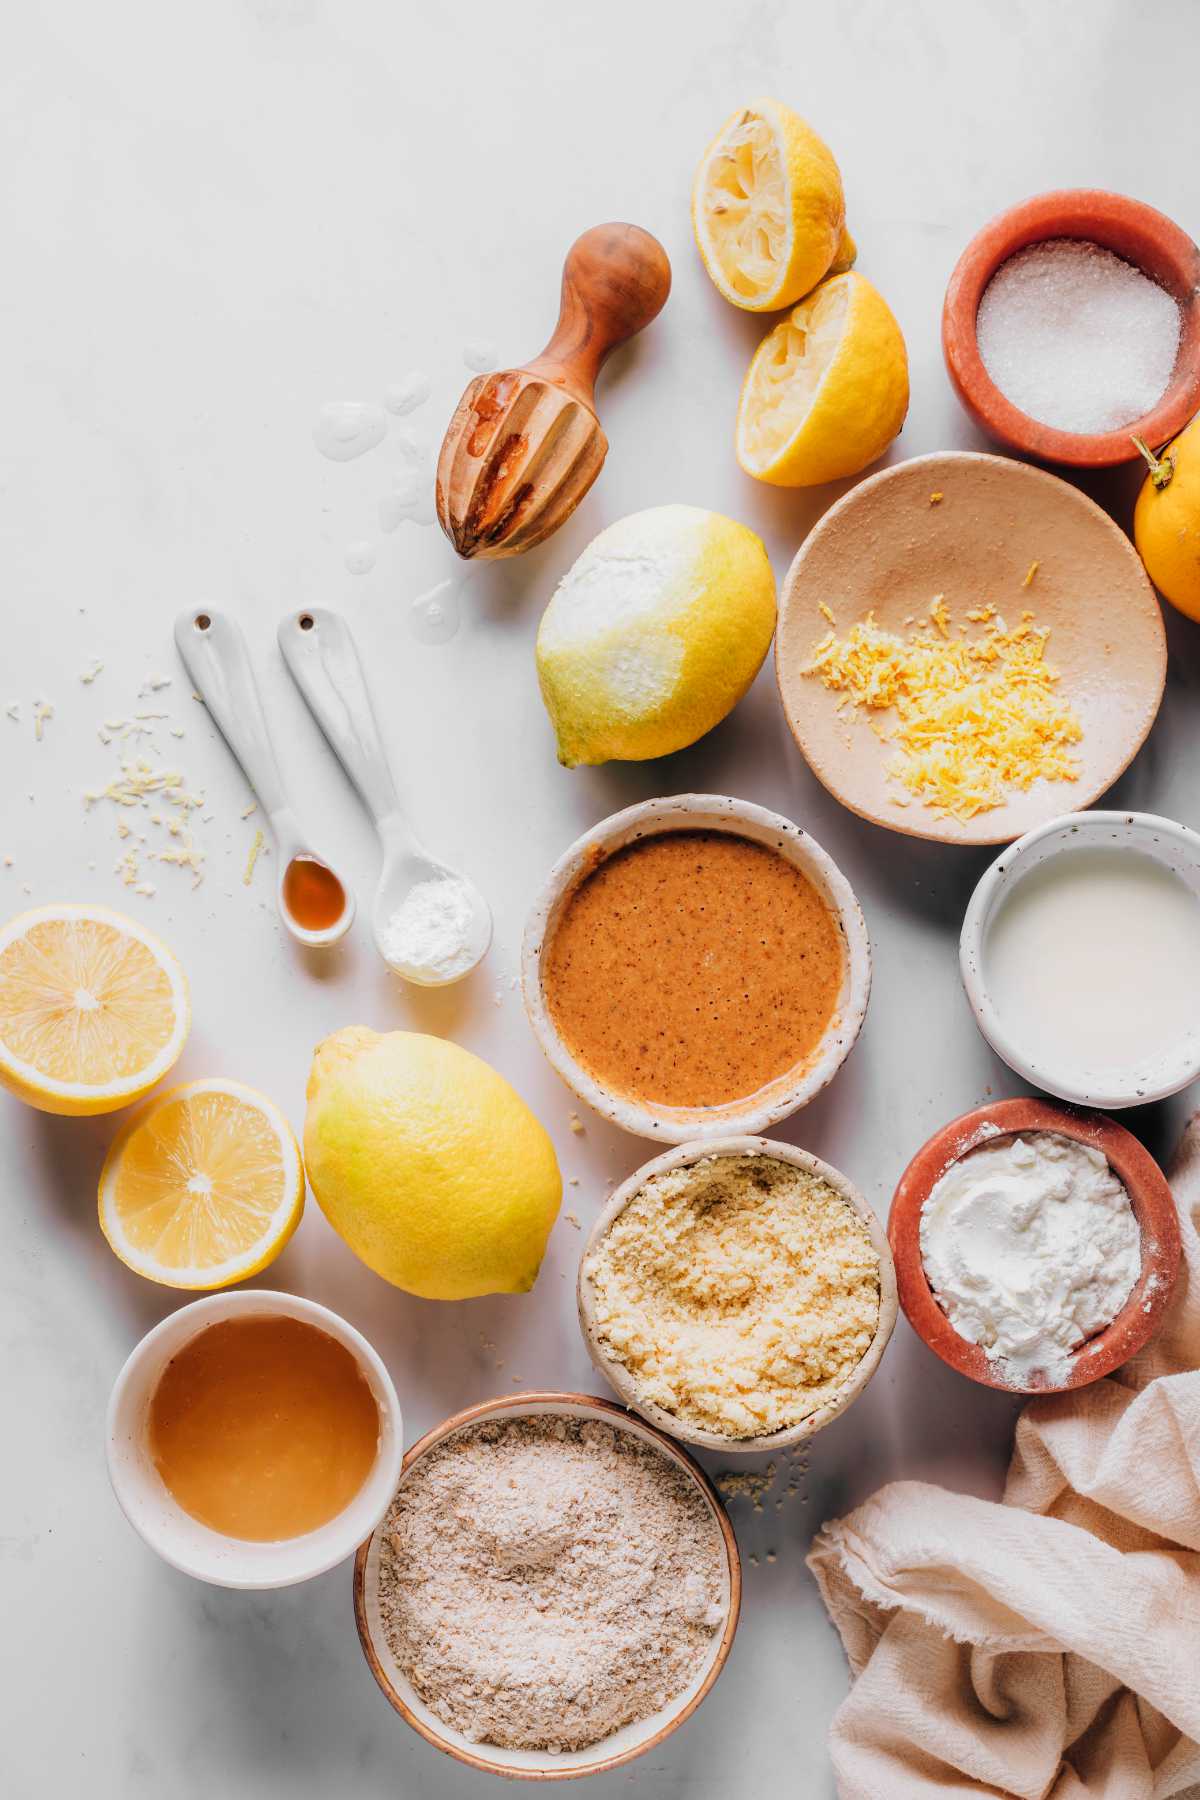 lemon, almond flour, oat flour, and baking staples